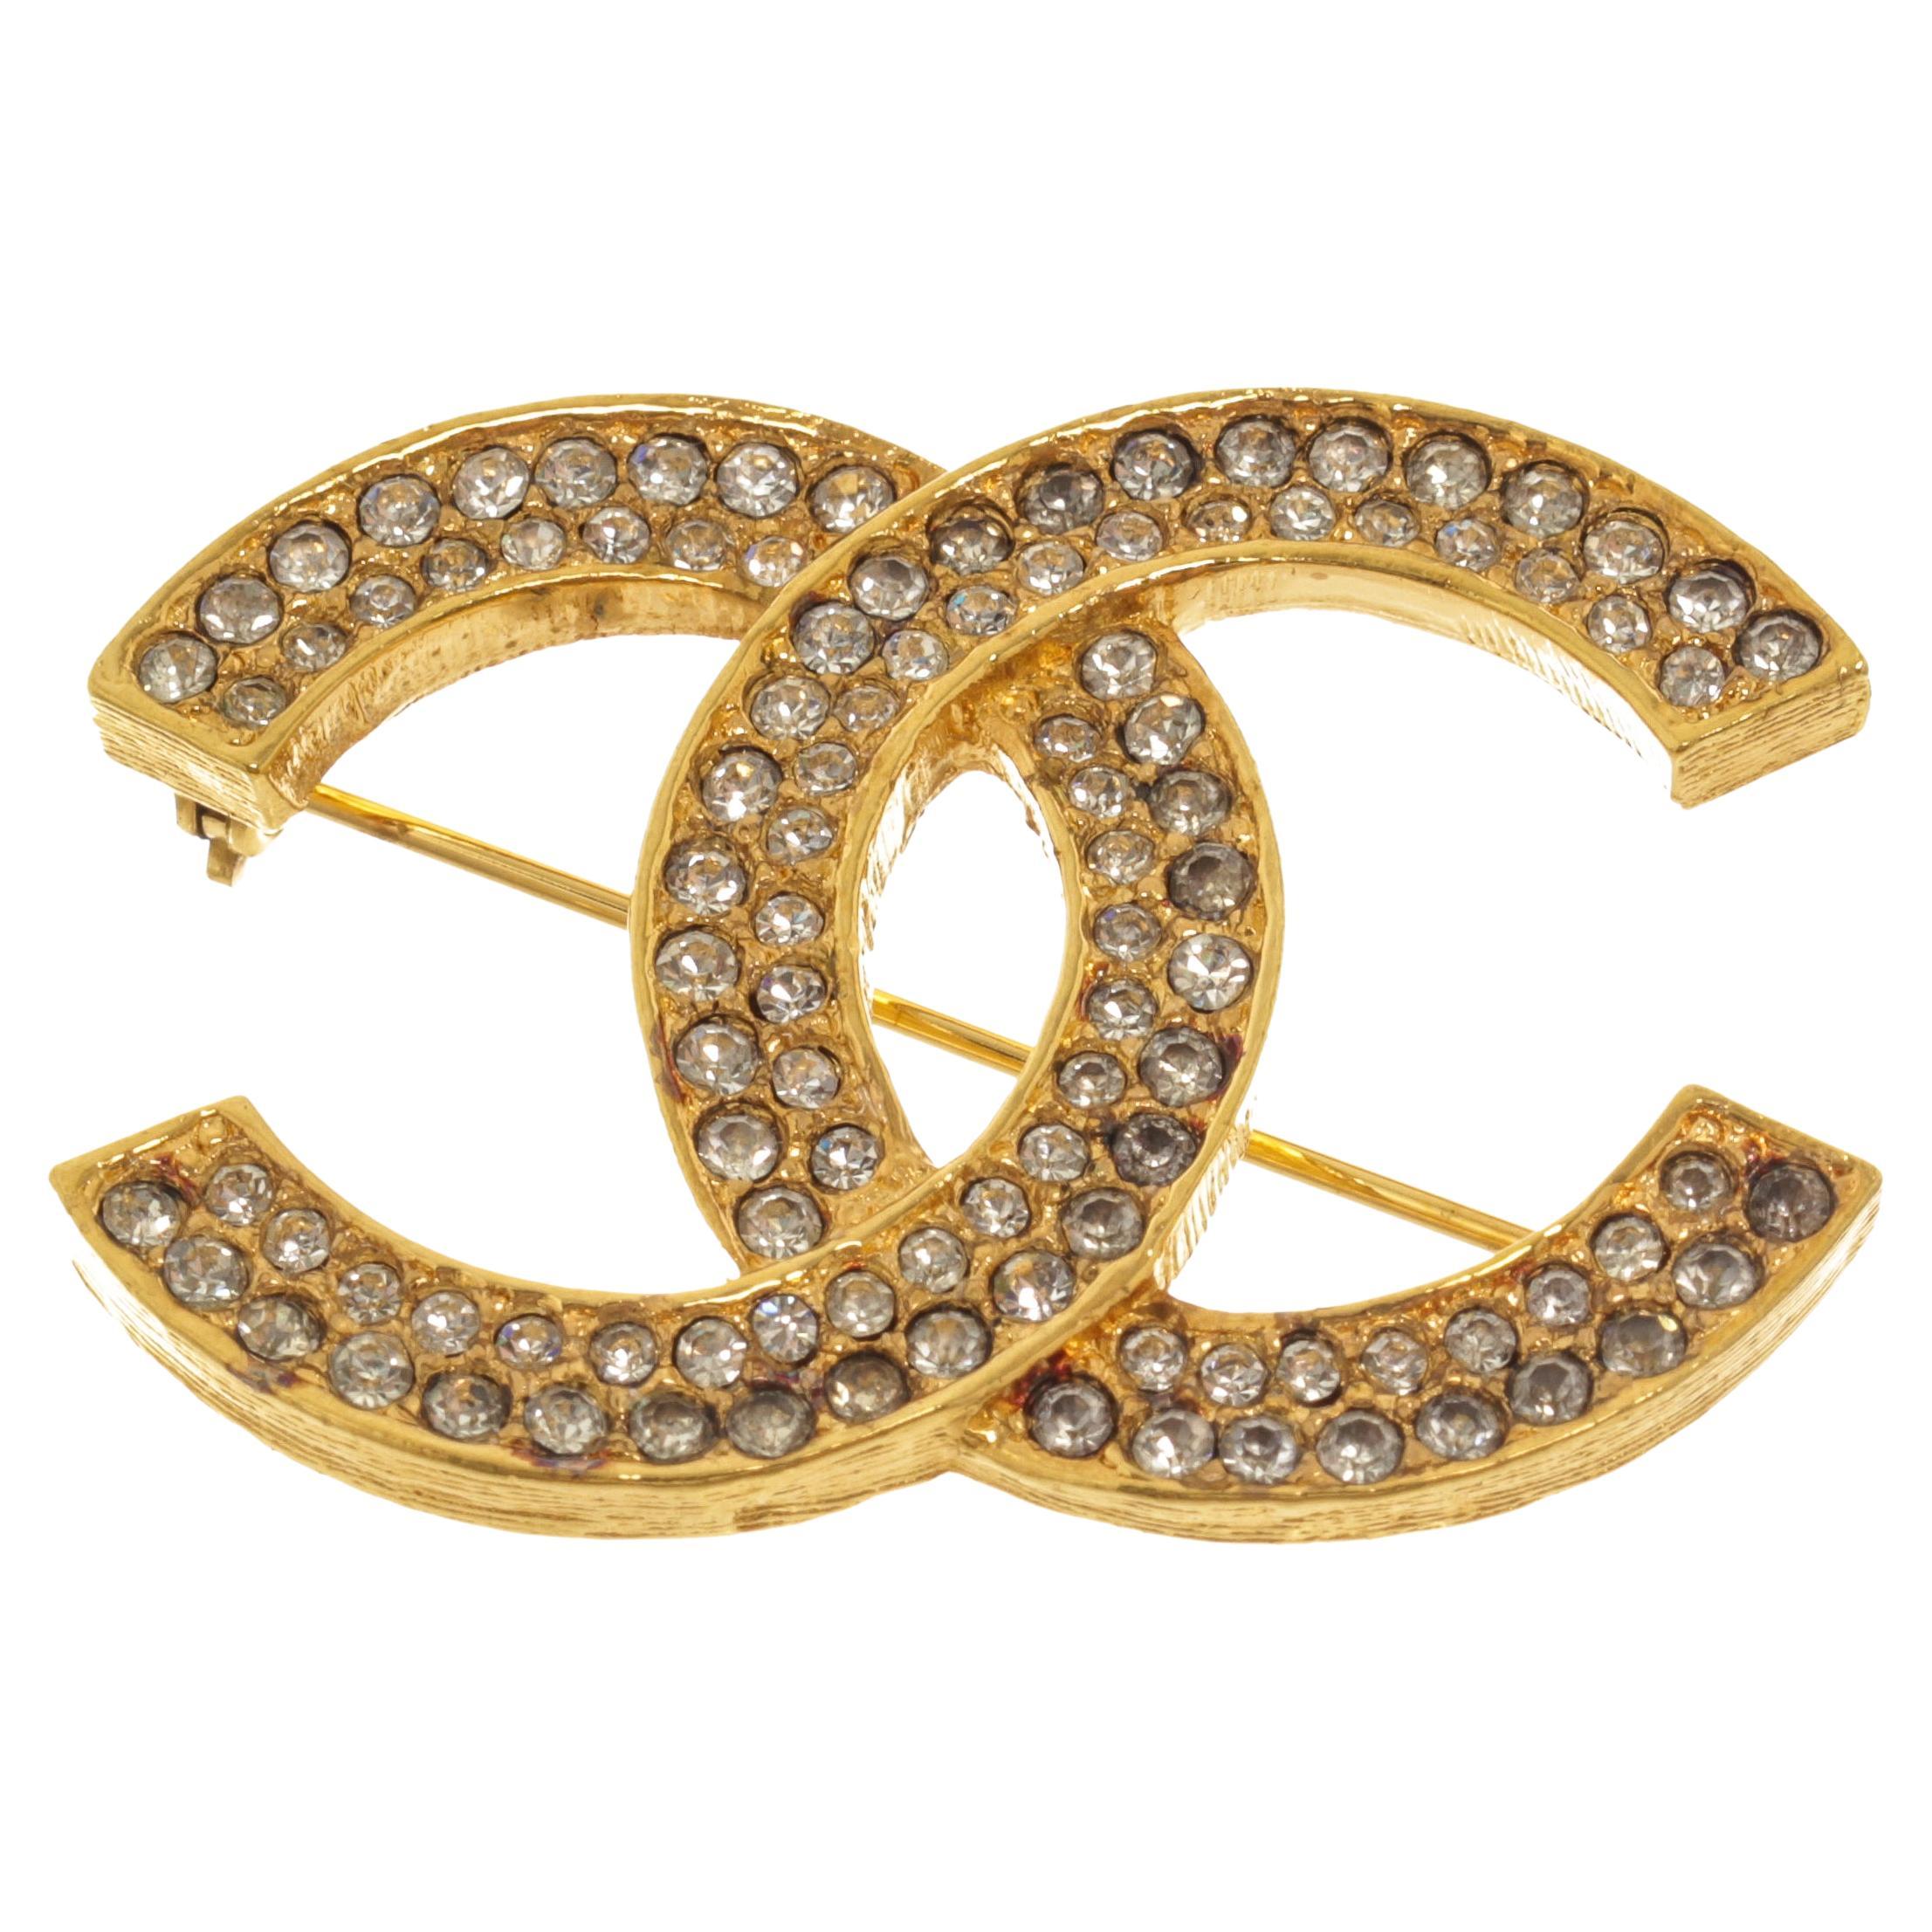 CHANEL, Jewelry, Coco Chanel Cc Interlocking C Logo Pin Brooch Lapel Gold  Tone Metal